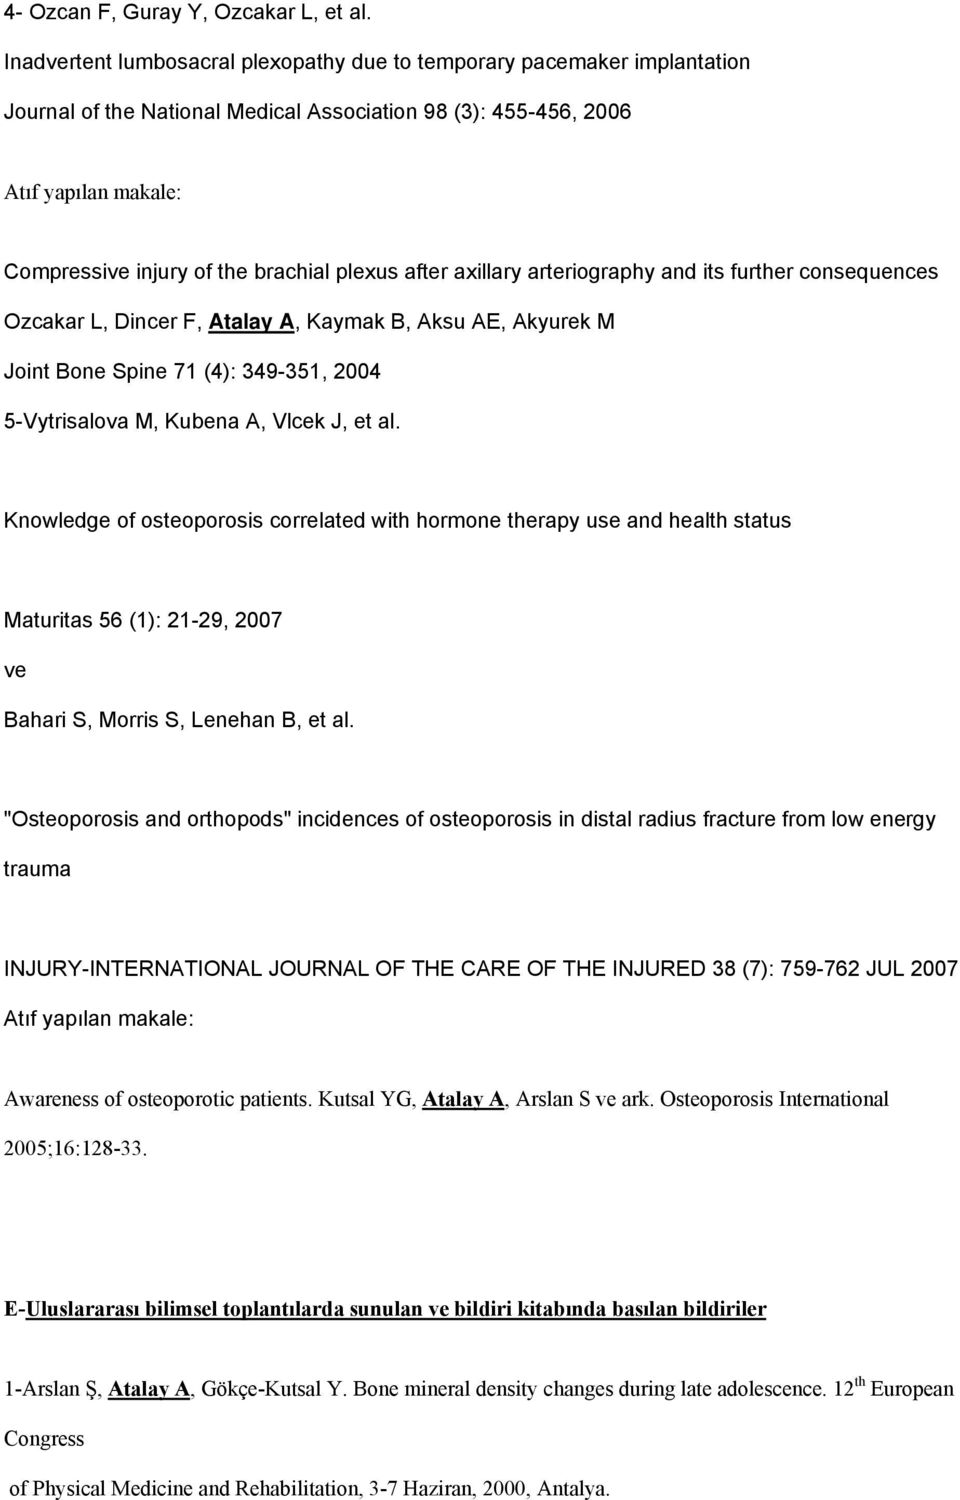 plexus after axillary arteriography and its further consequences Ozcakar L, Dincer F, Atalay A, Kaymak B, Aksu AE, Akyurek M Joint Bone Spine 71 (4): 349-351, 2004 5-Vytrisalova M, Kubena A, Vlcek J,